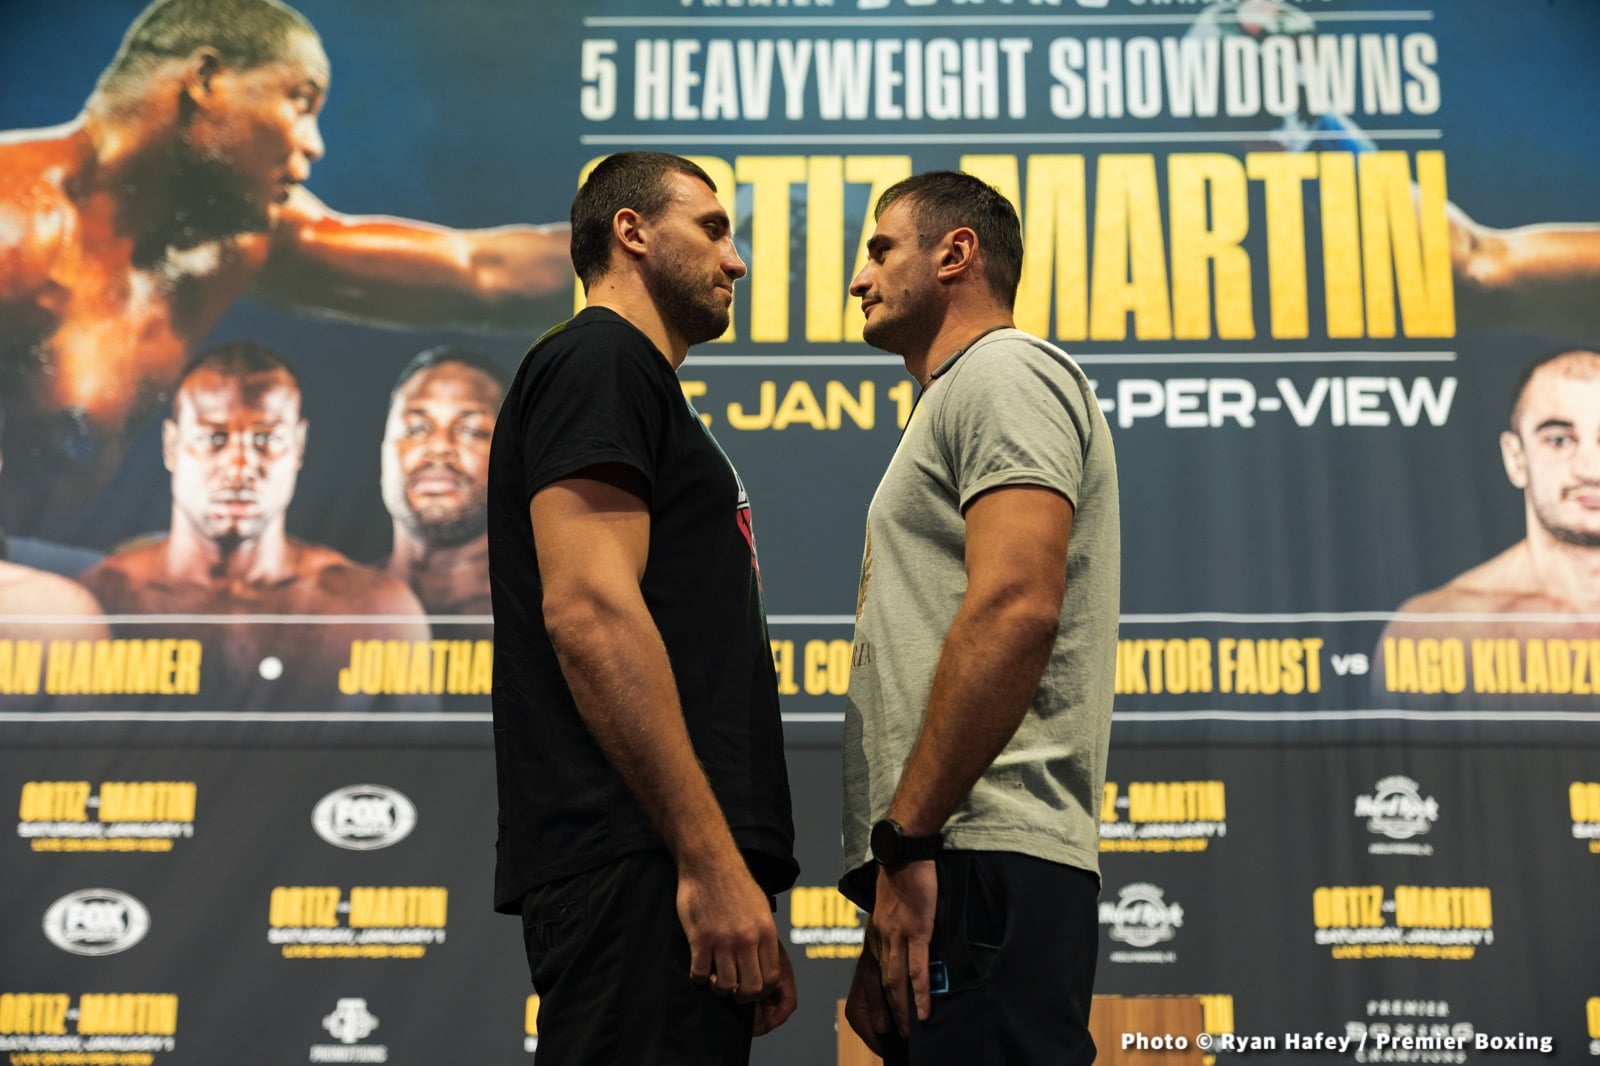 Luis Ortiz vs. Charles Martin & Frank Sanchez vs. Christian Hammer Weights